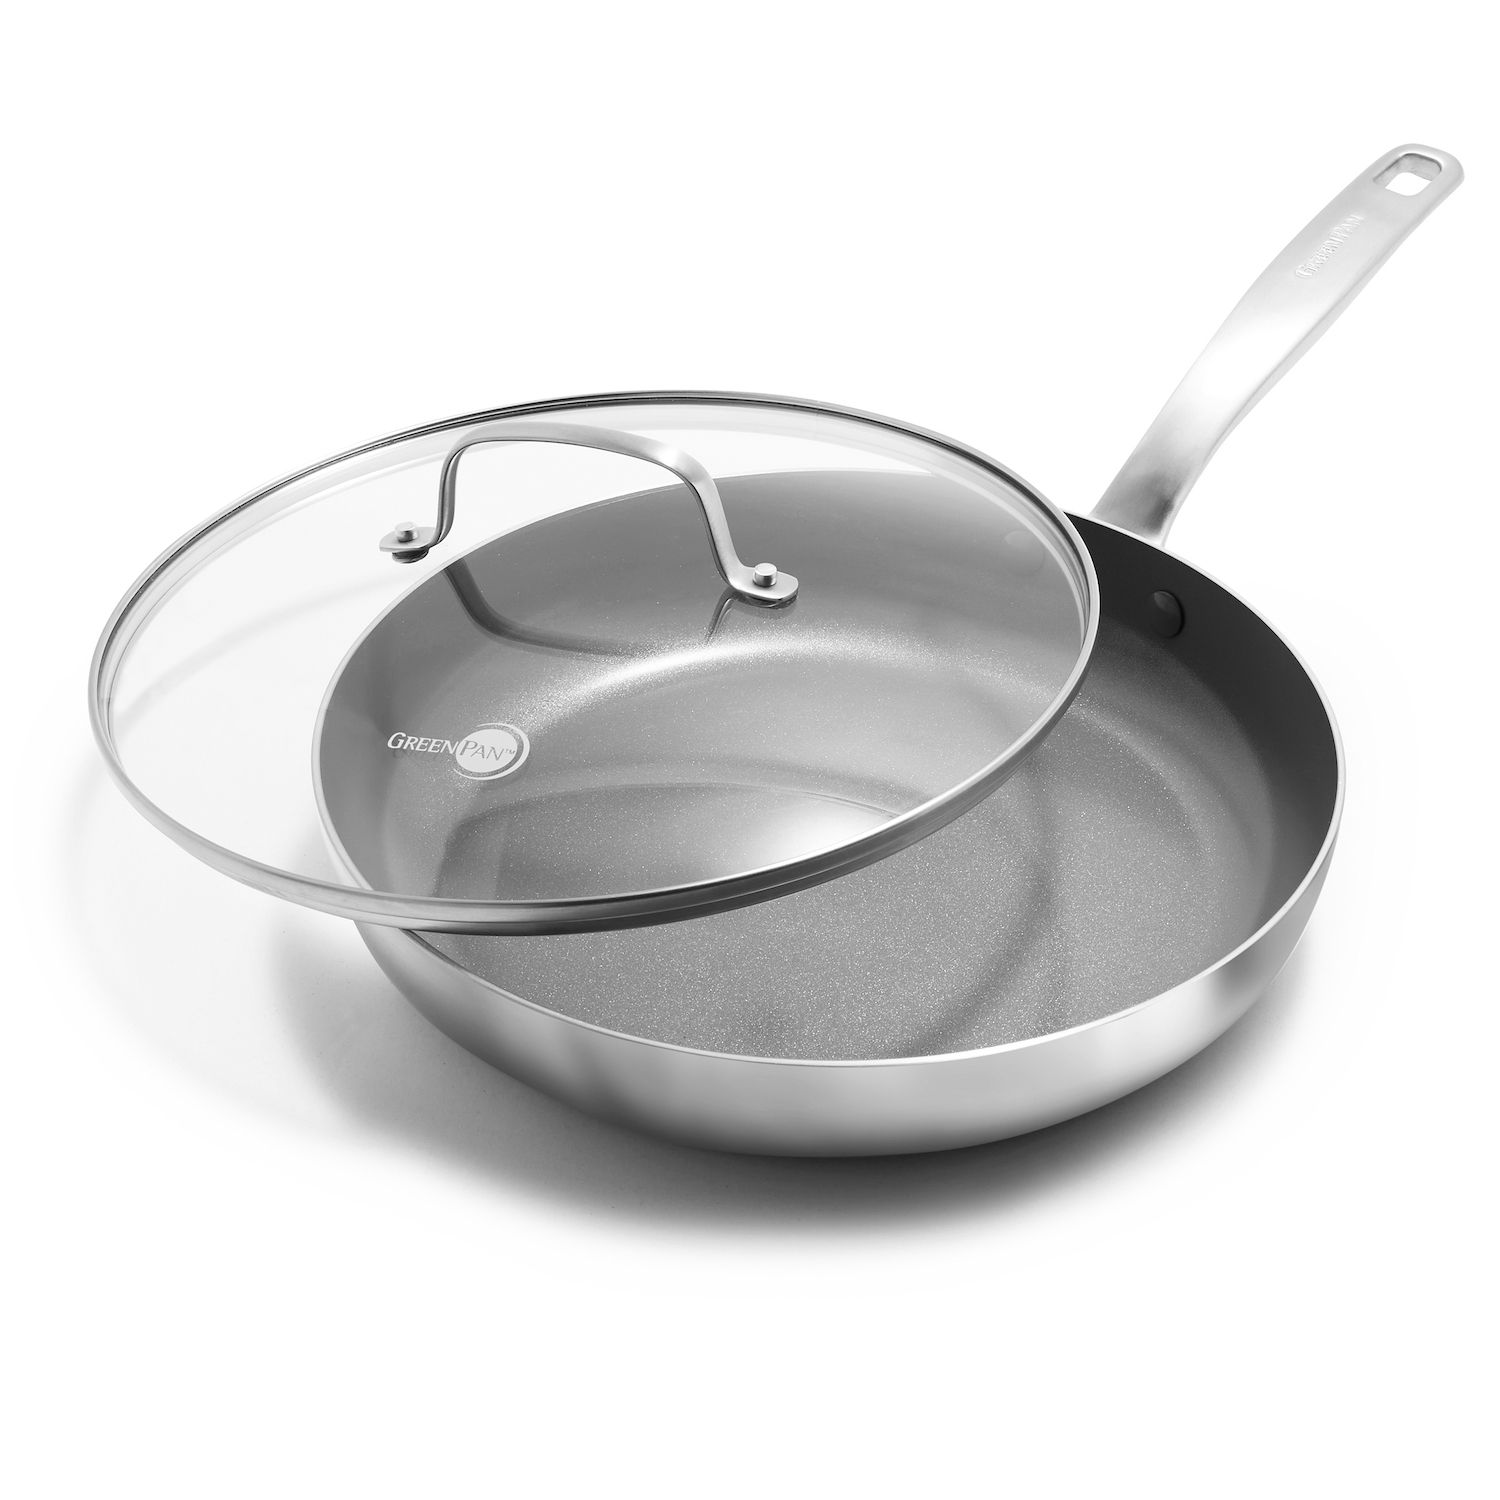 GoodCook Healthy Ceramic Titanium-infused Fry pan, 12 Inch, Light